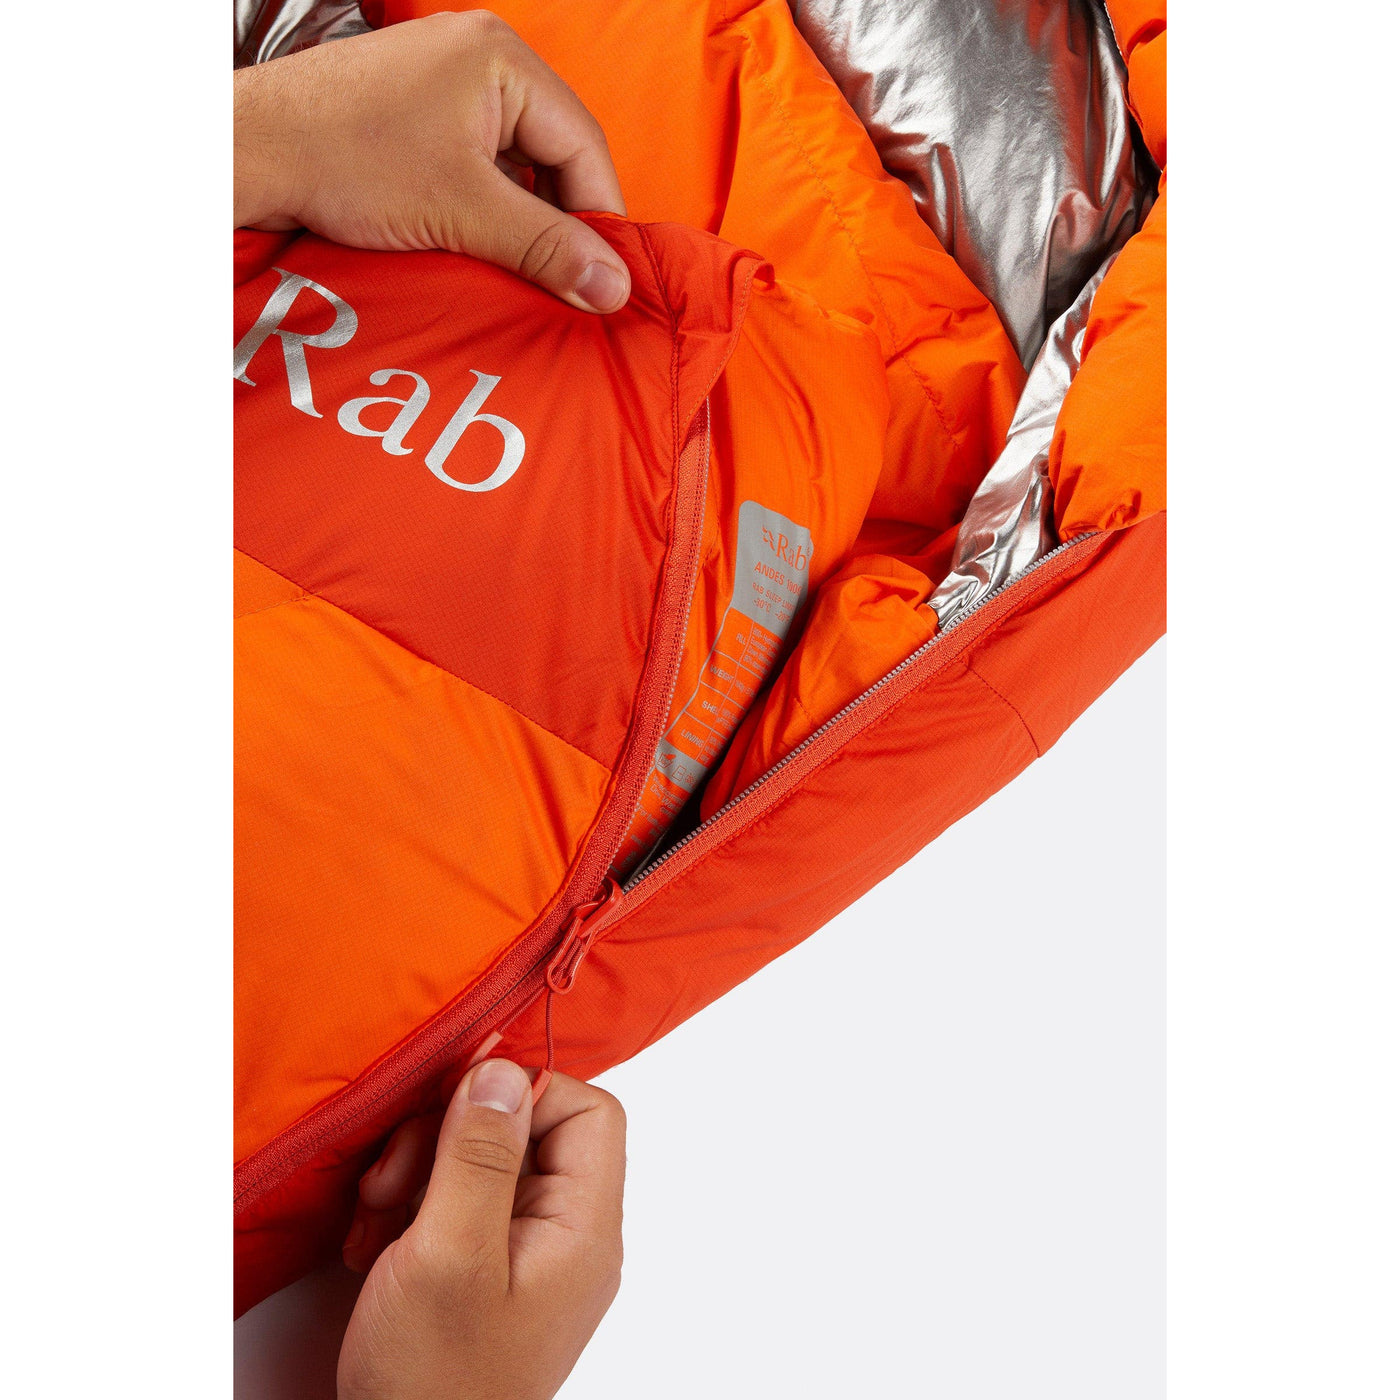 Rab Andes Infinium 1000 -28 Down Sleeping bag (1590 Grams)